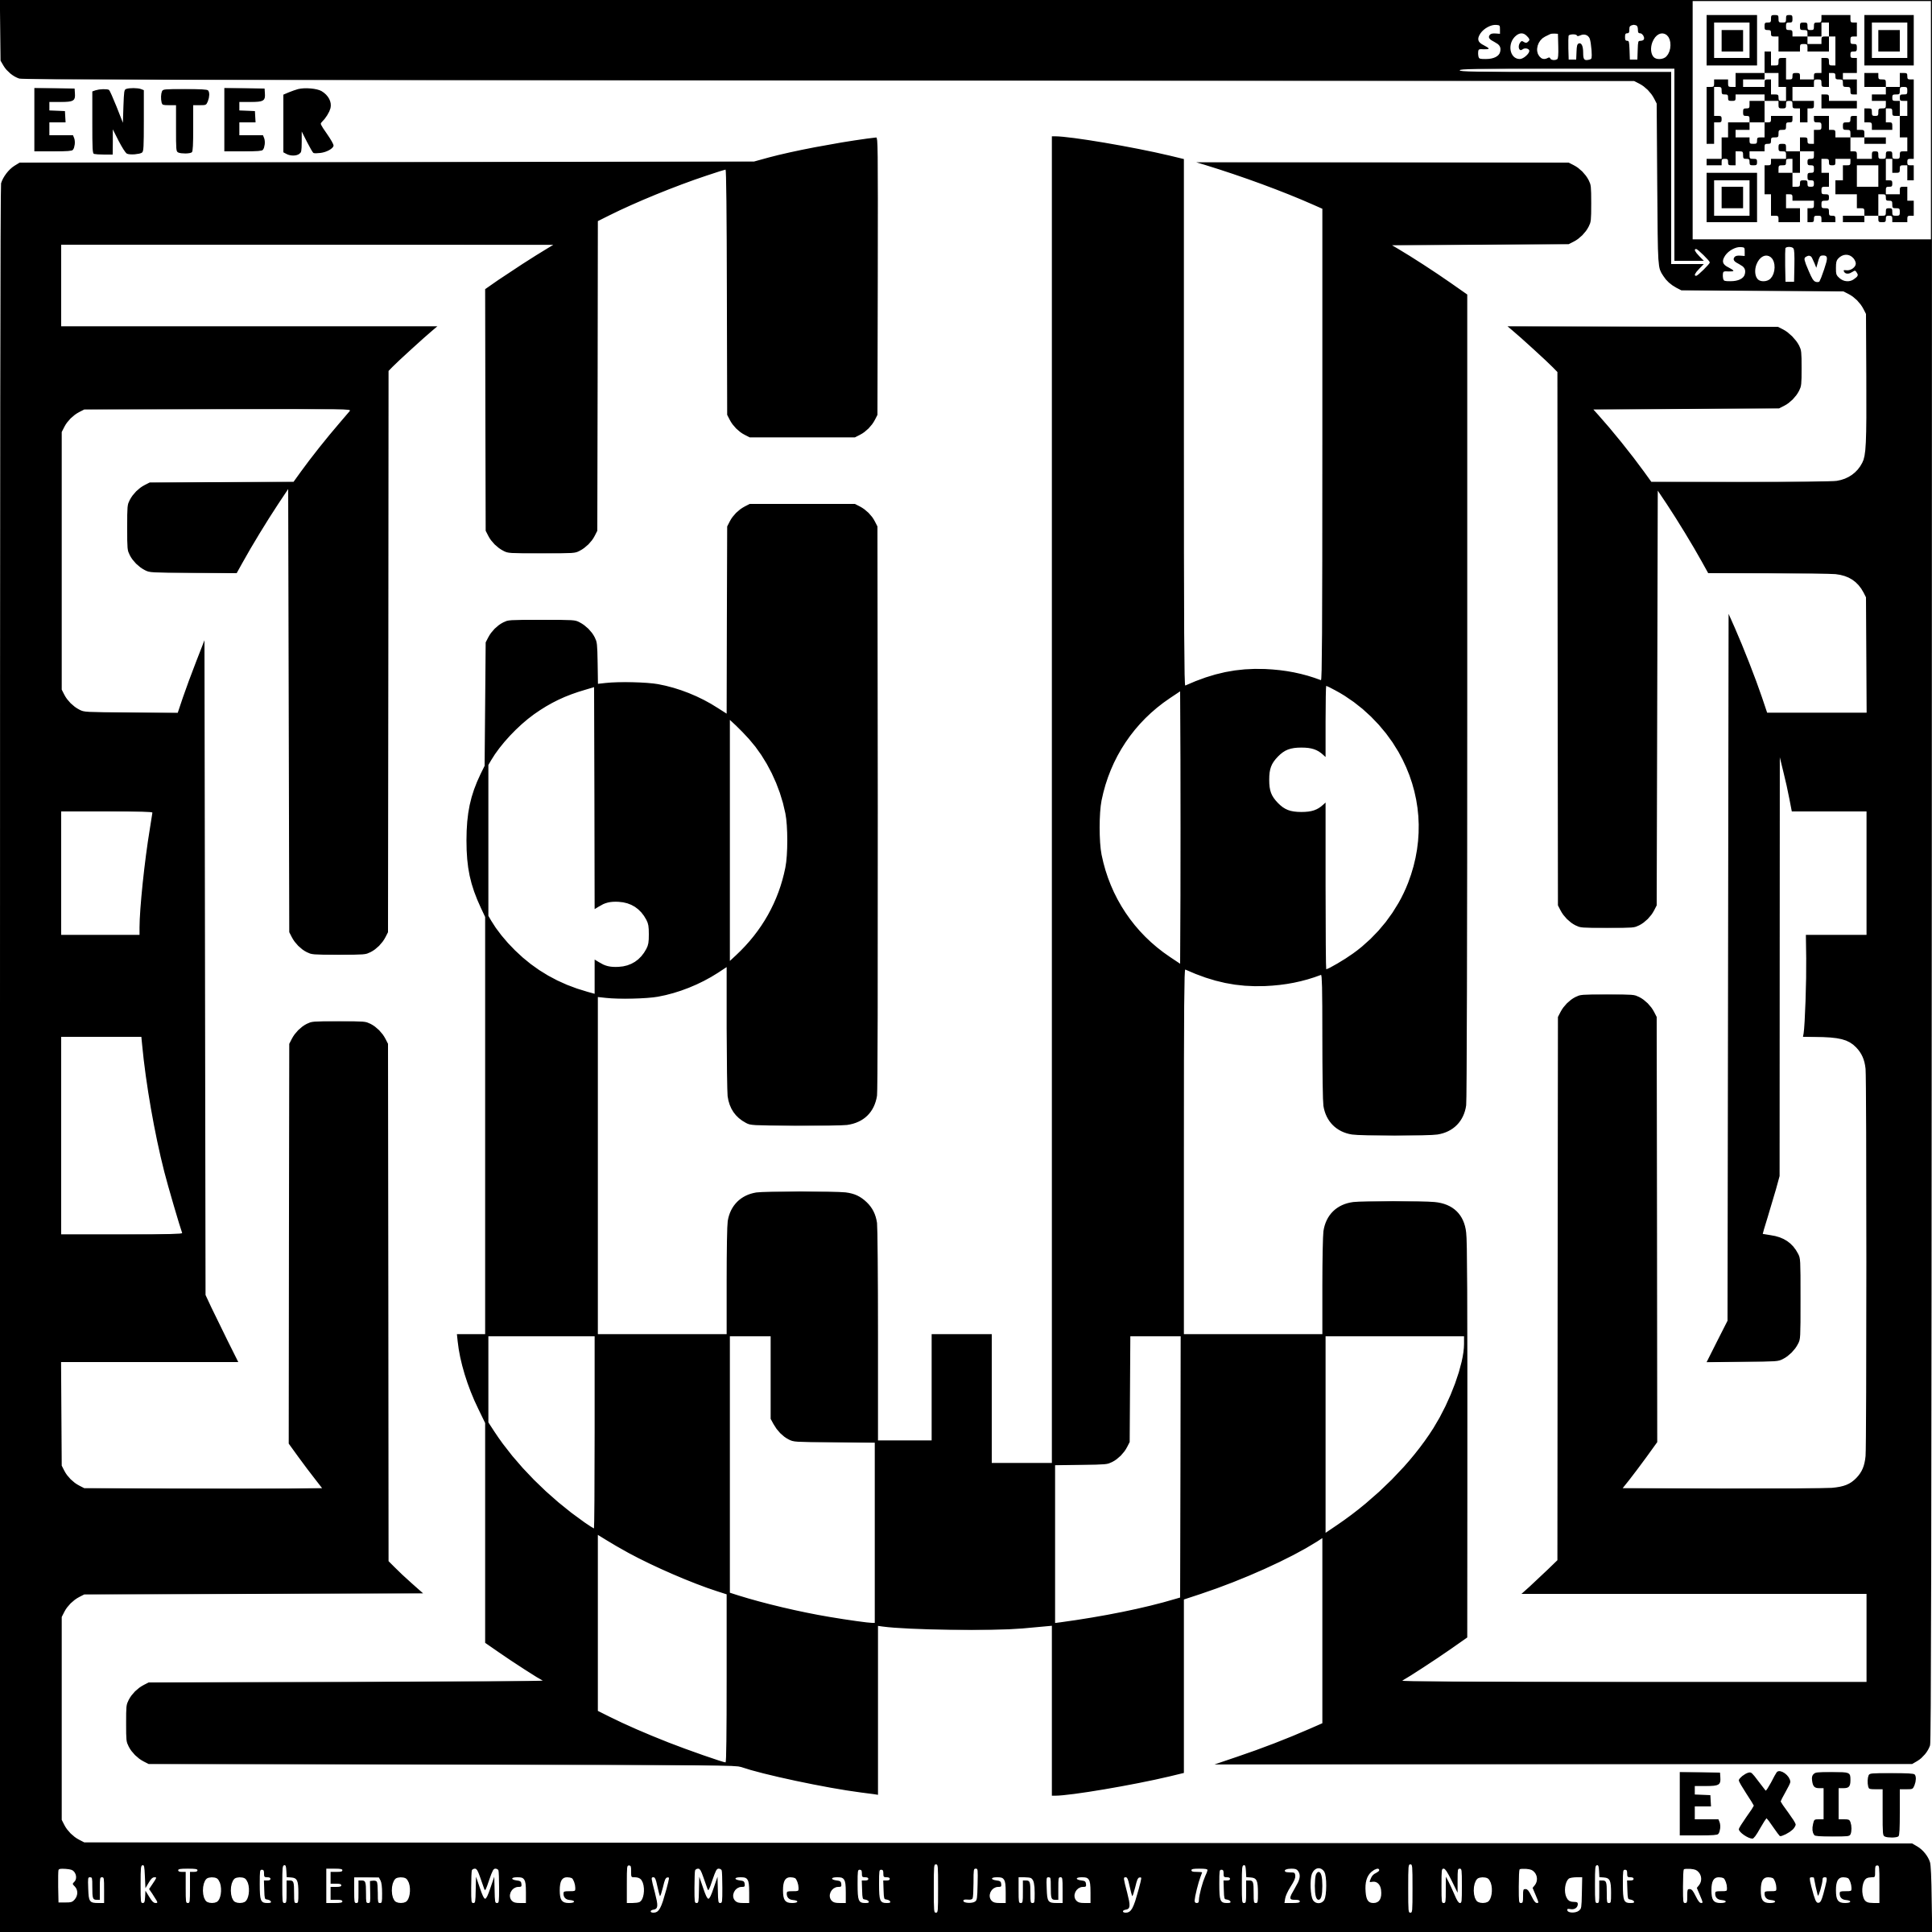 hill clipart logo